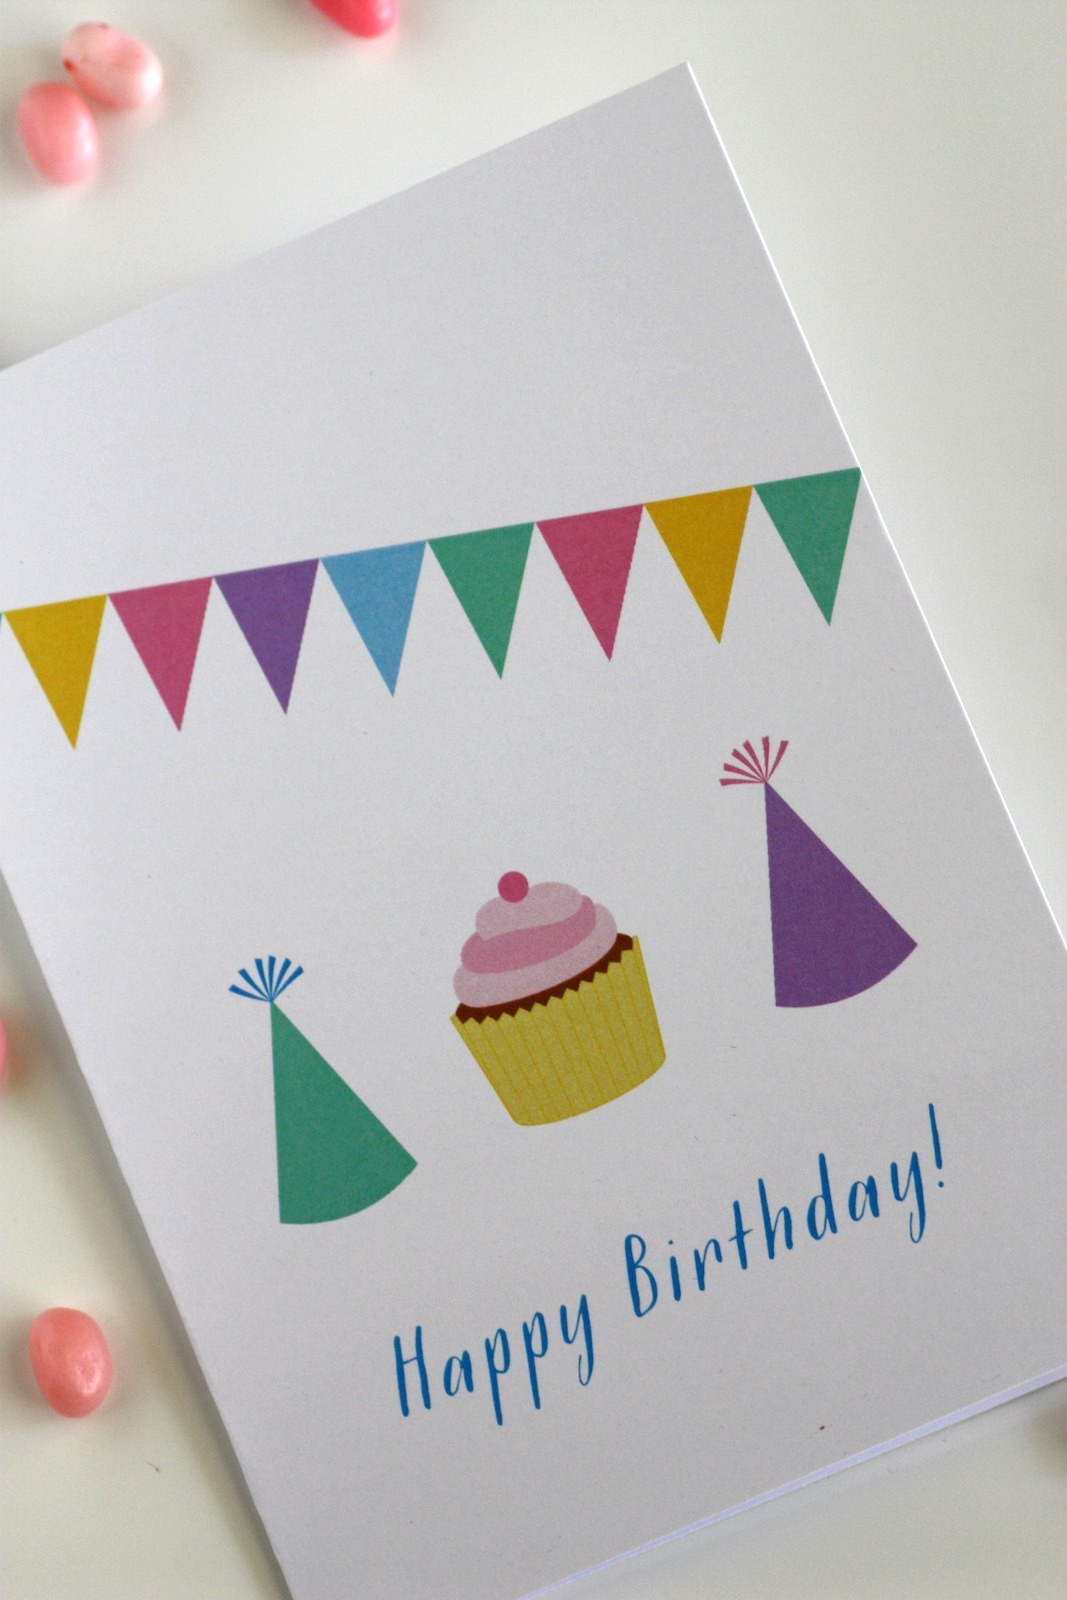 Free Printable Blank Birthday Cards | Catch My Party - Free Printable Birthday Cards For Kids